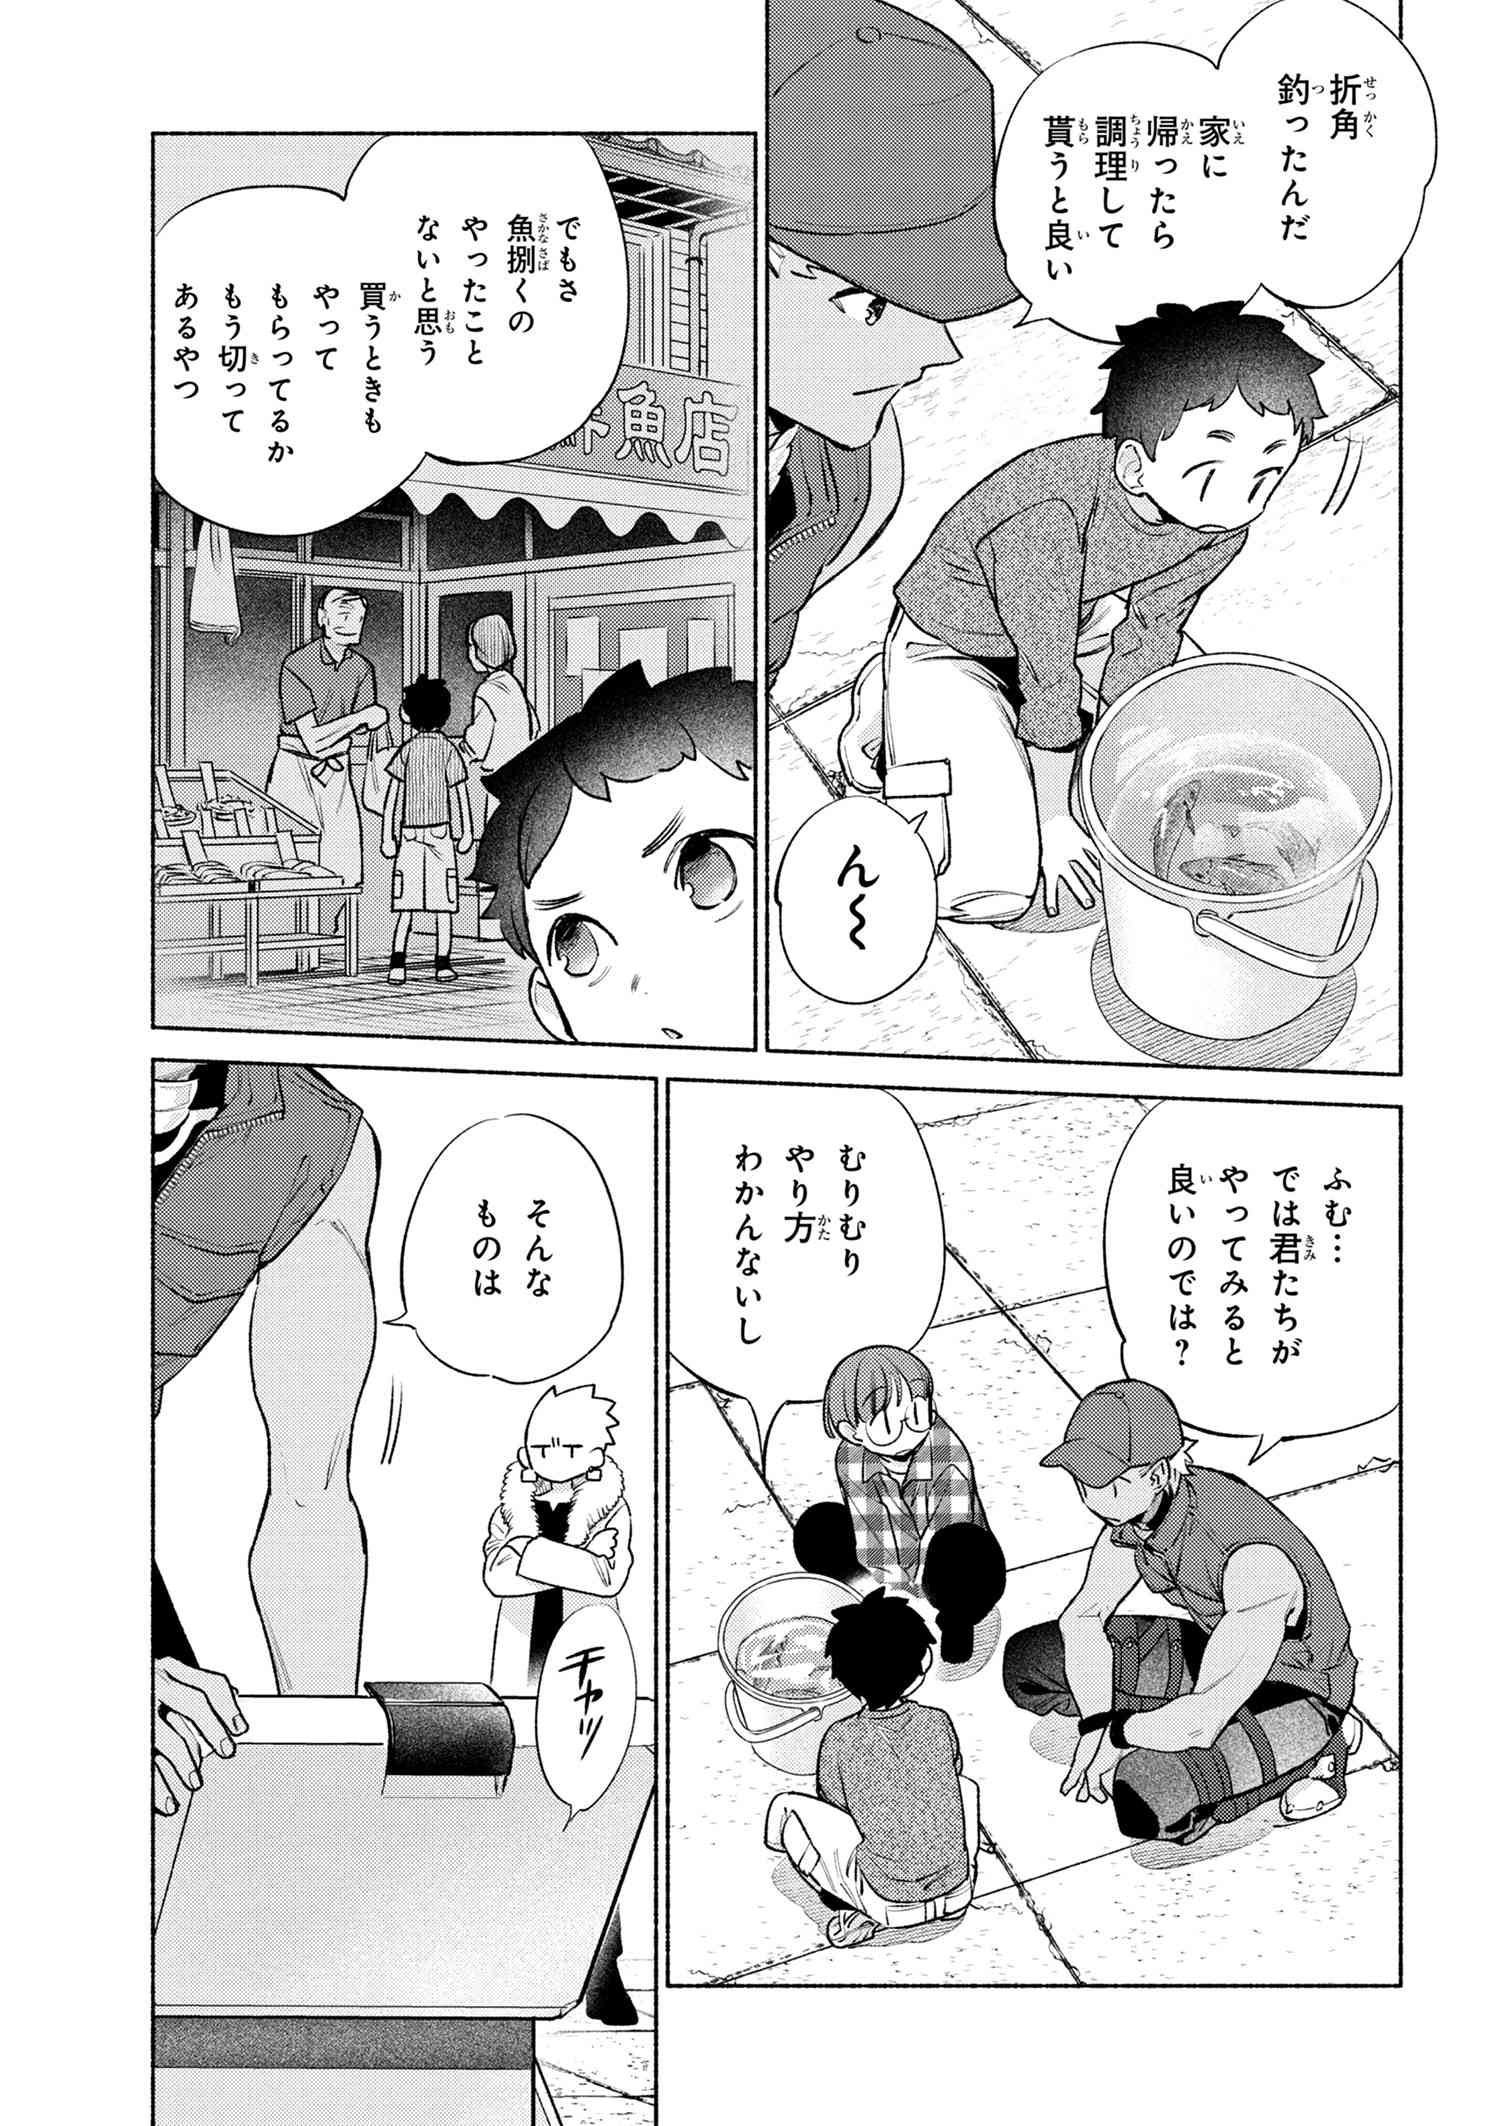 Emiya-san Chi no Kyou no Gohan - Chapter 51.5 - Page 5